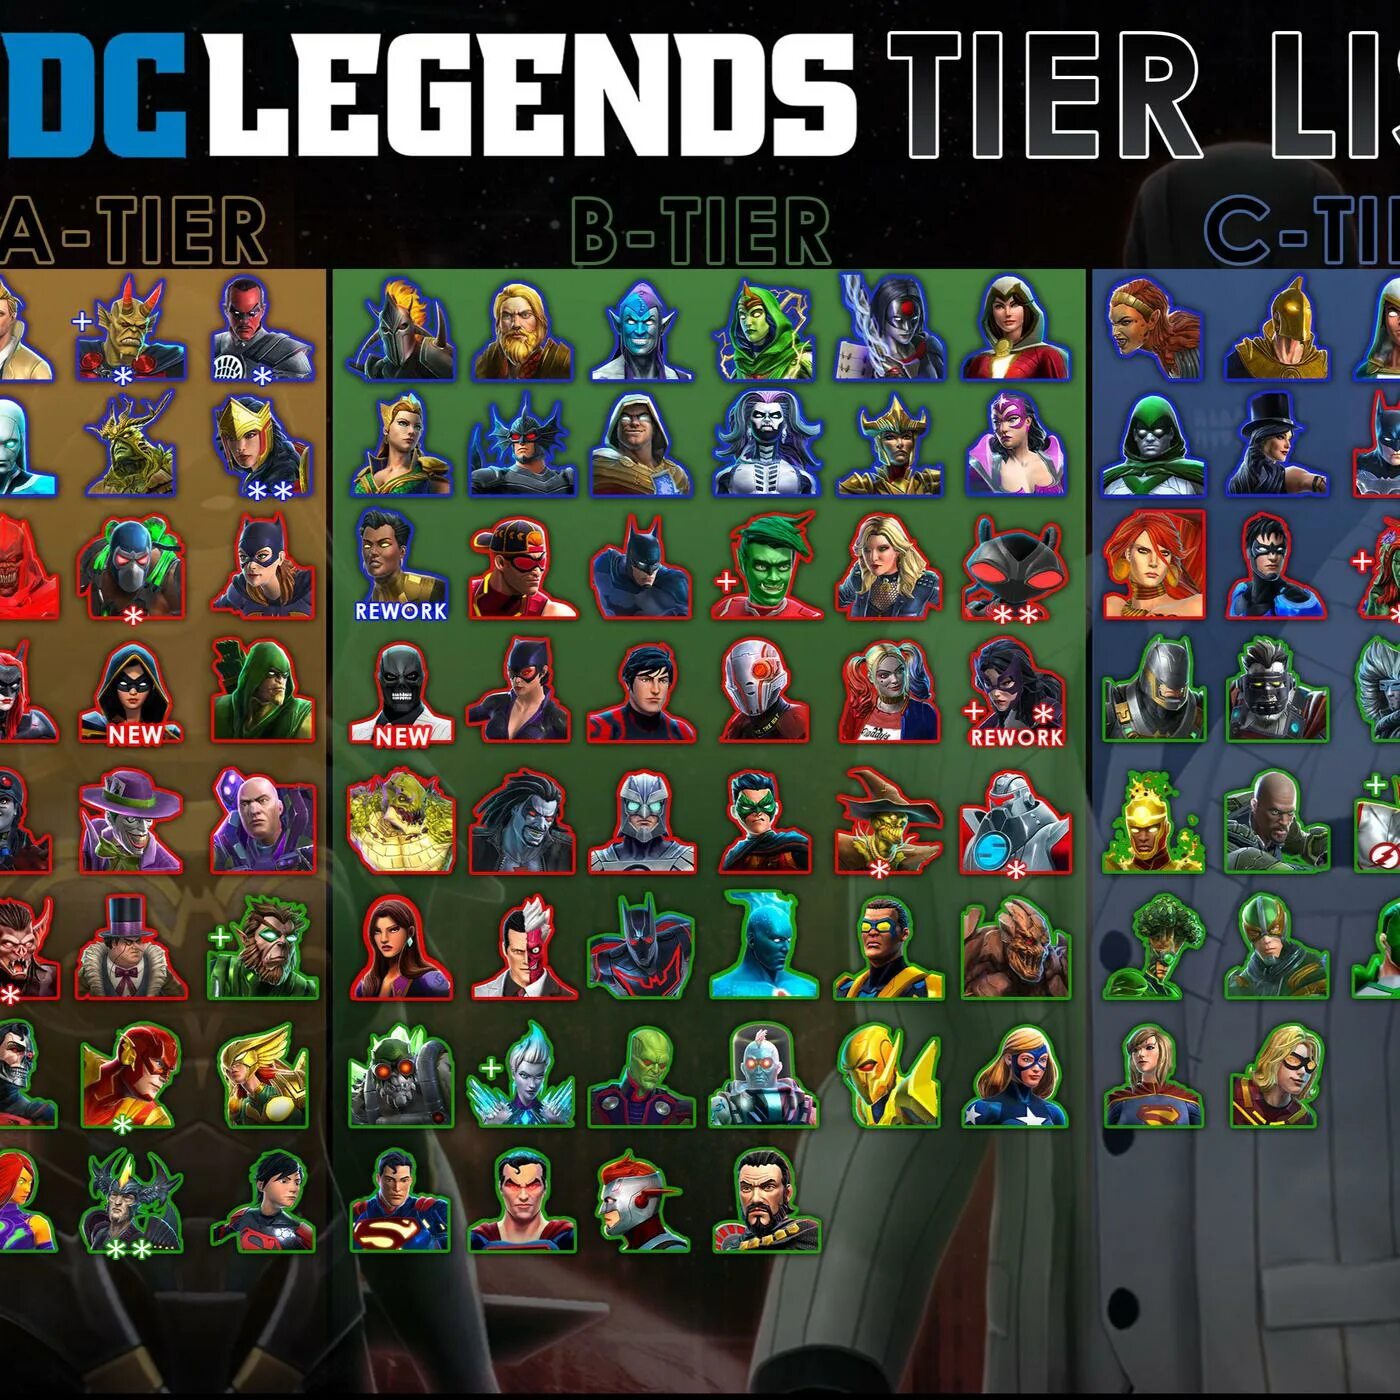 Ml adventure тир. Ml Adventure тир лист героев. Тир лист героев mobile Legends Adventure. DC Legends Tier list. Тир лист мобайл легенд адвентуре.